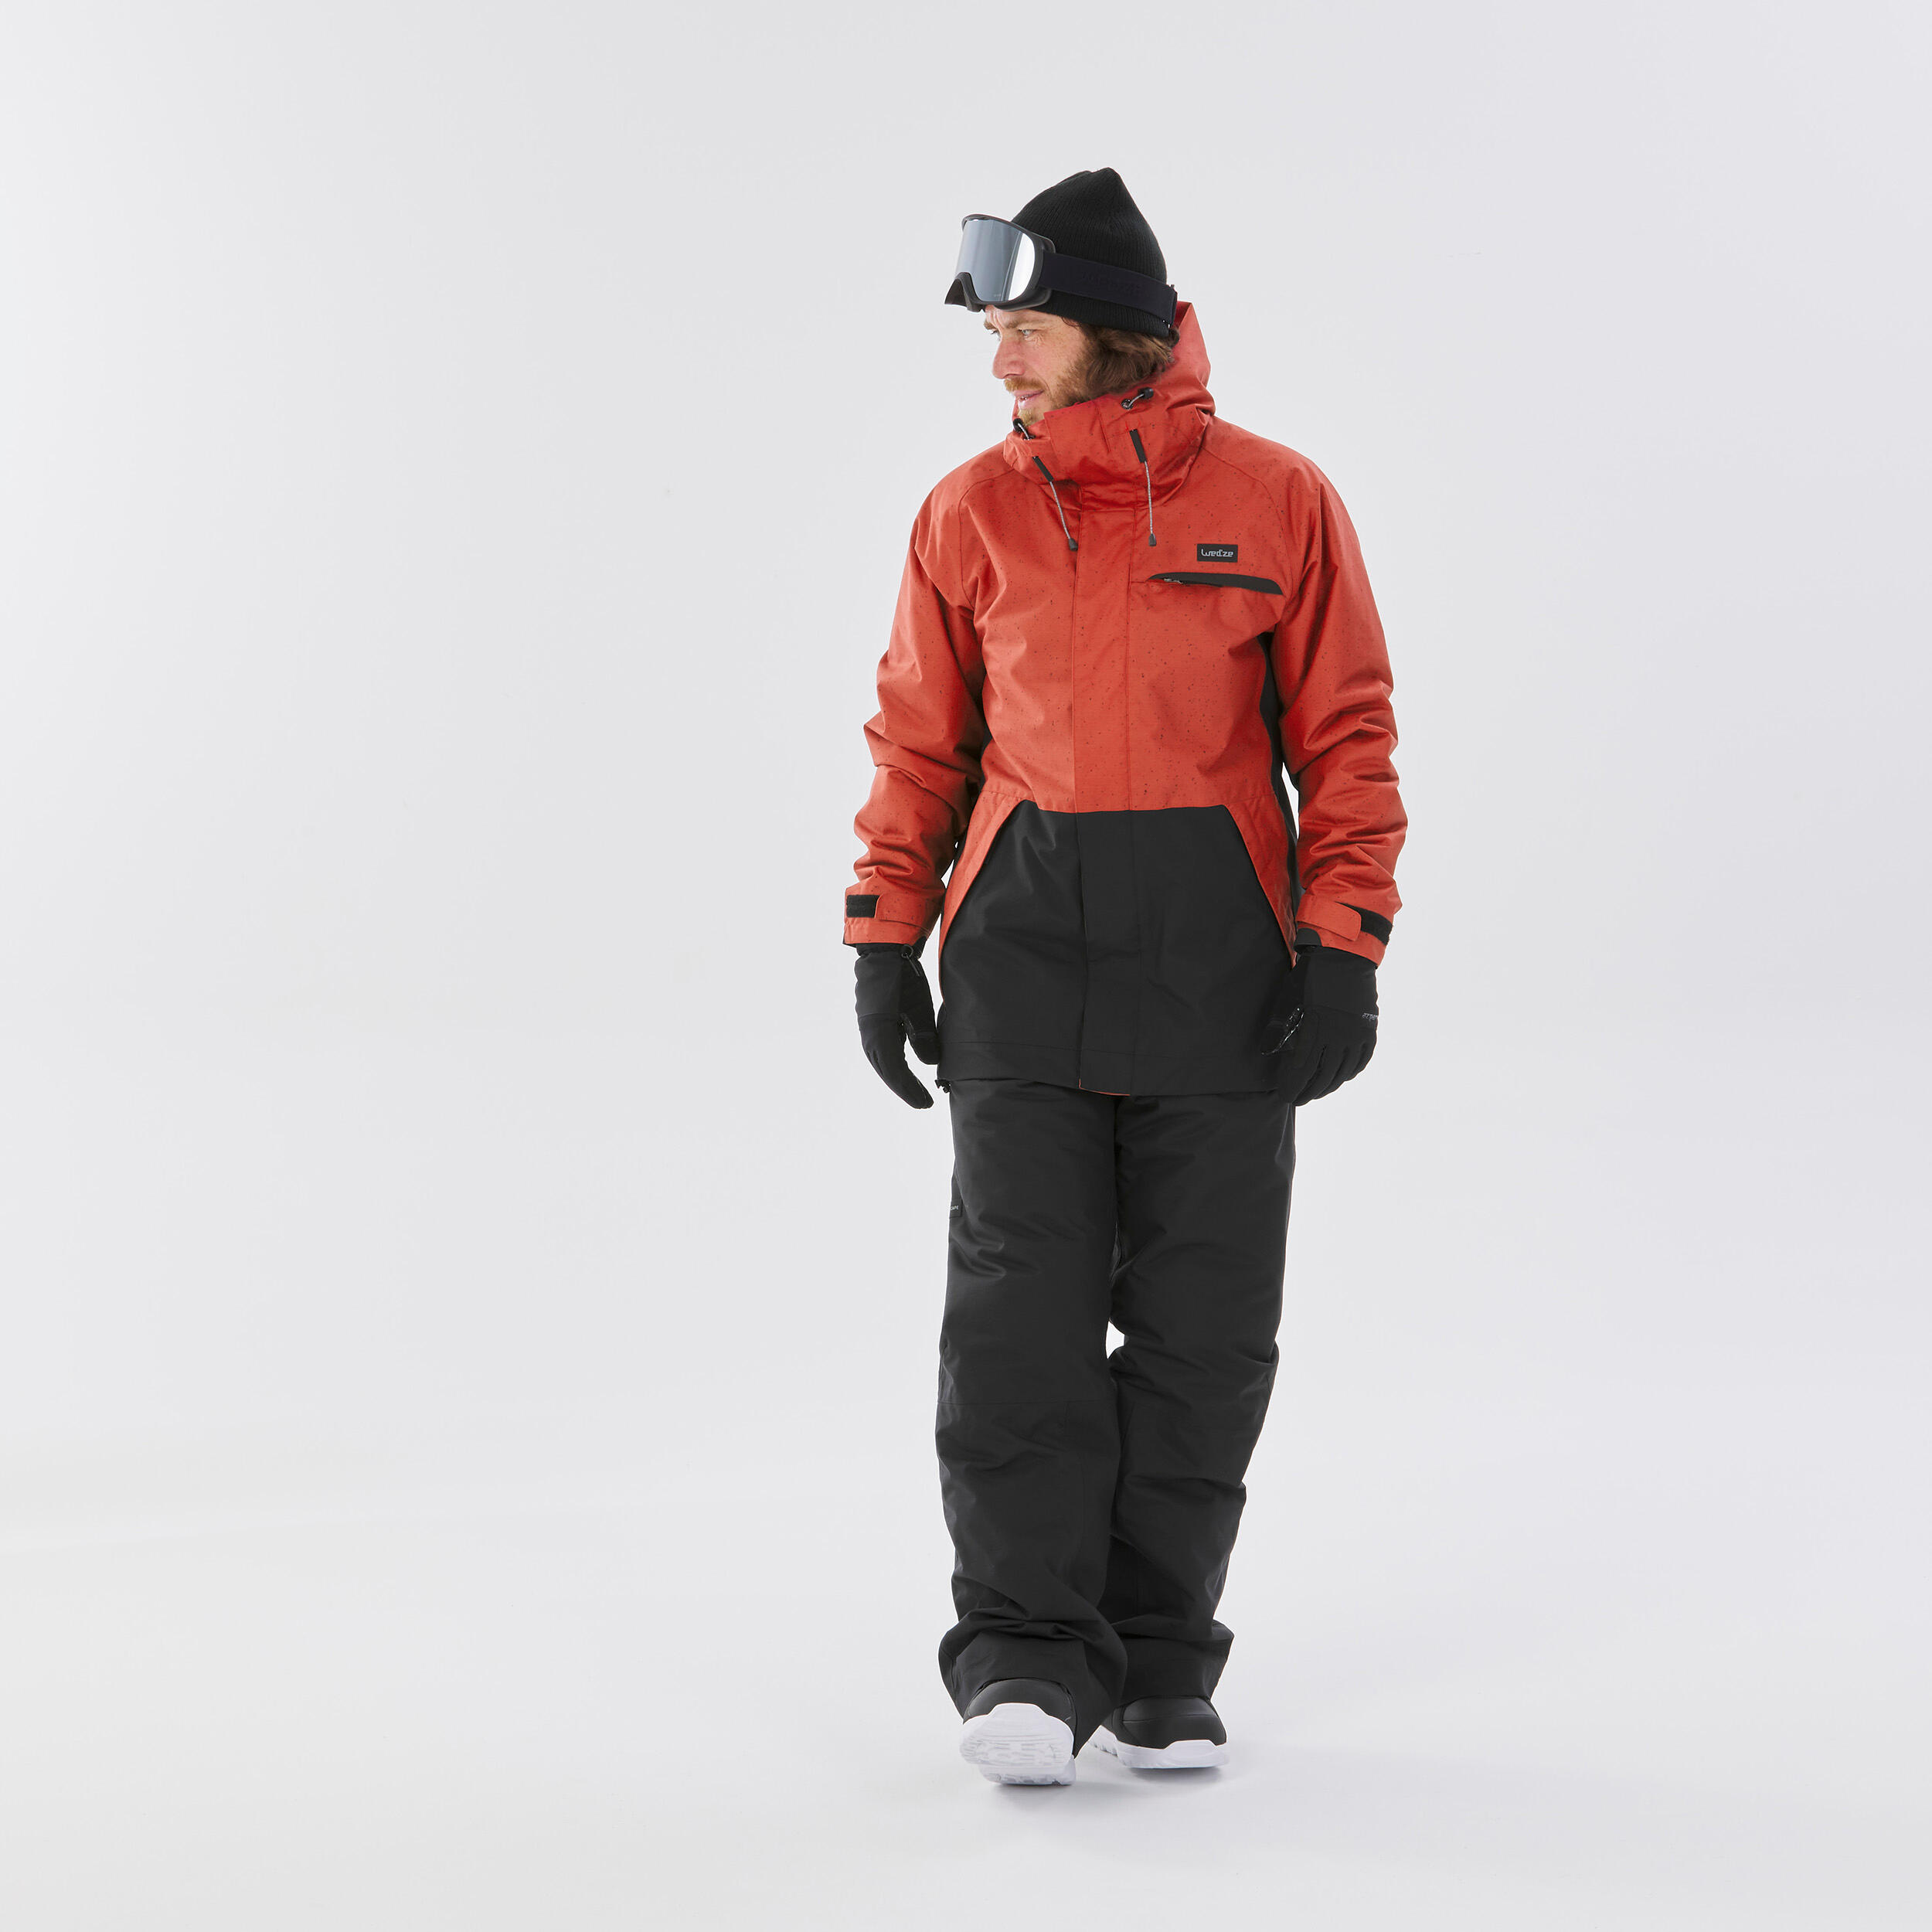 Men's Snowboard Jacket - SNB 100 Red 4/13